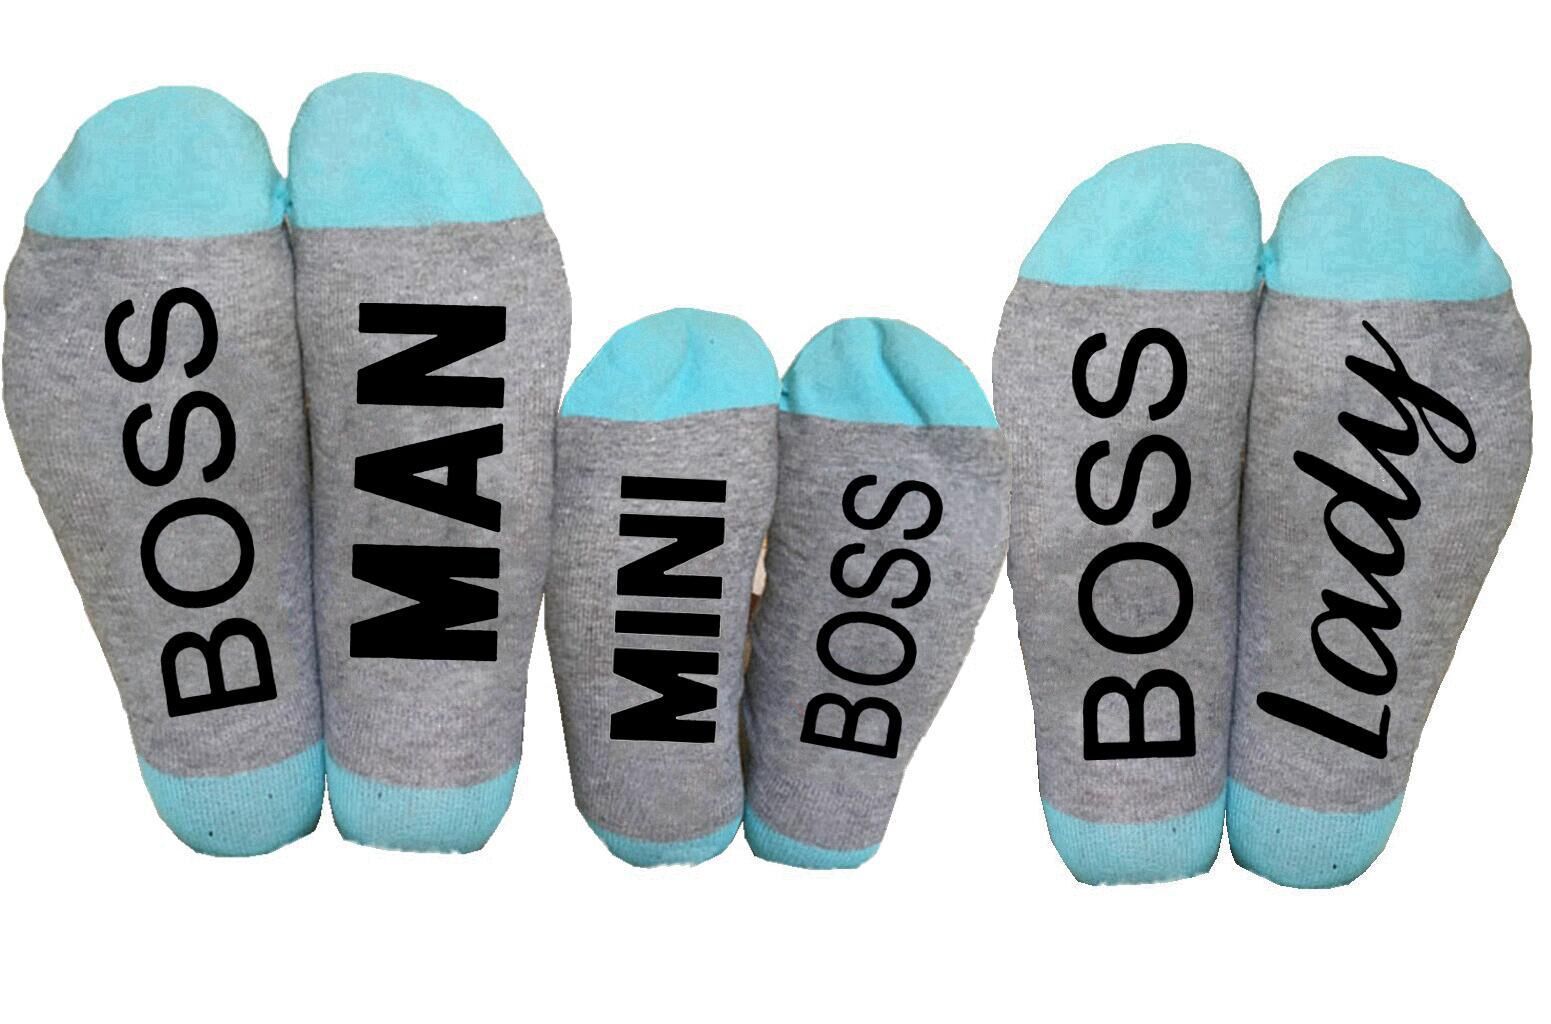 MAN MINI LADY BOSS Casual Socks English Letters Cotton Crew Parent-child Socks